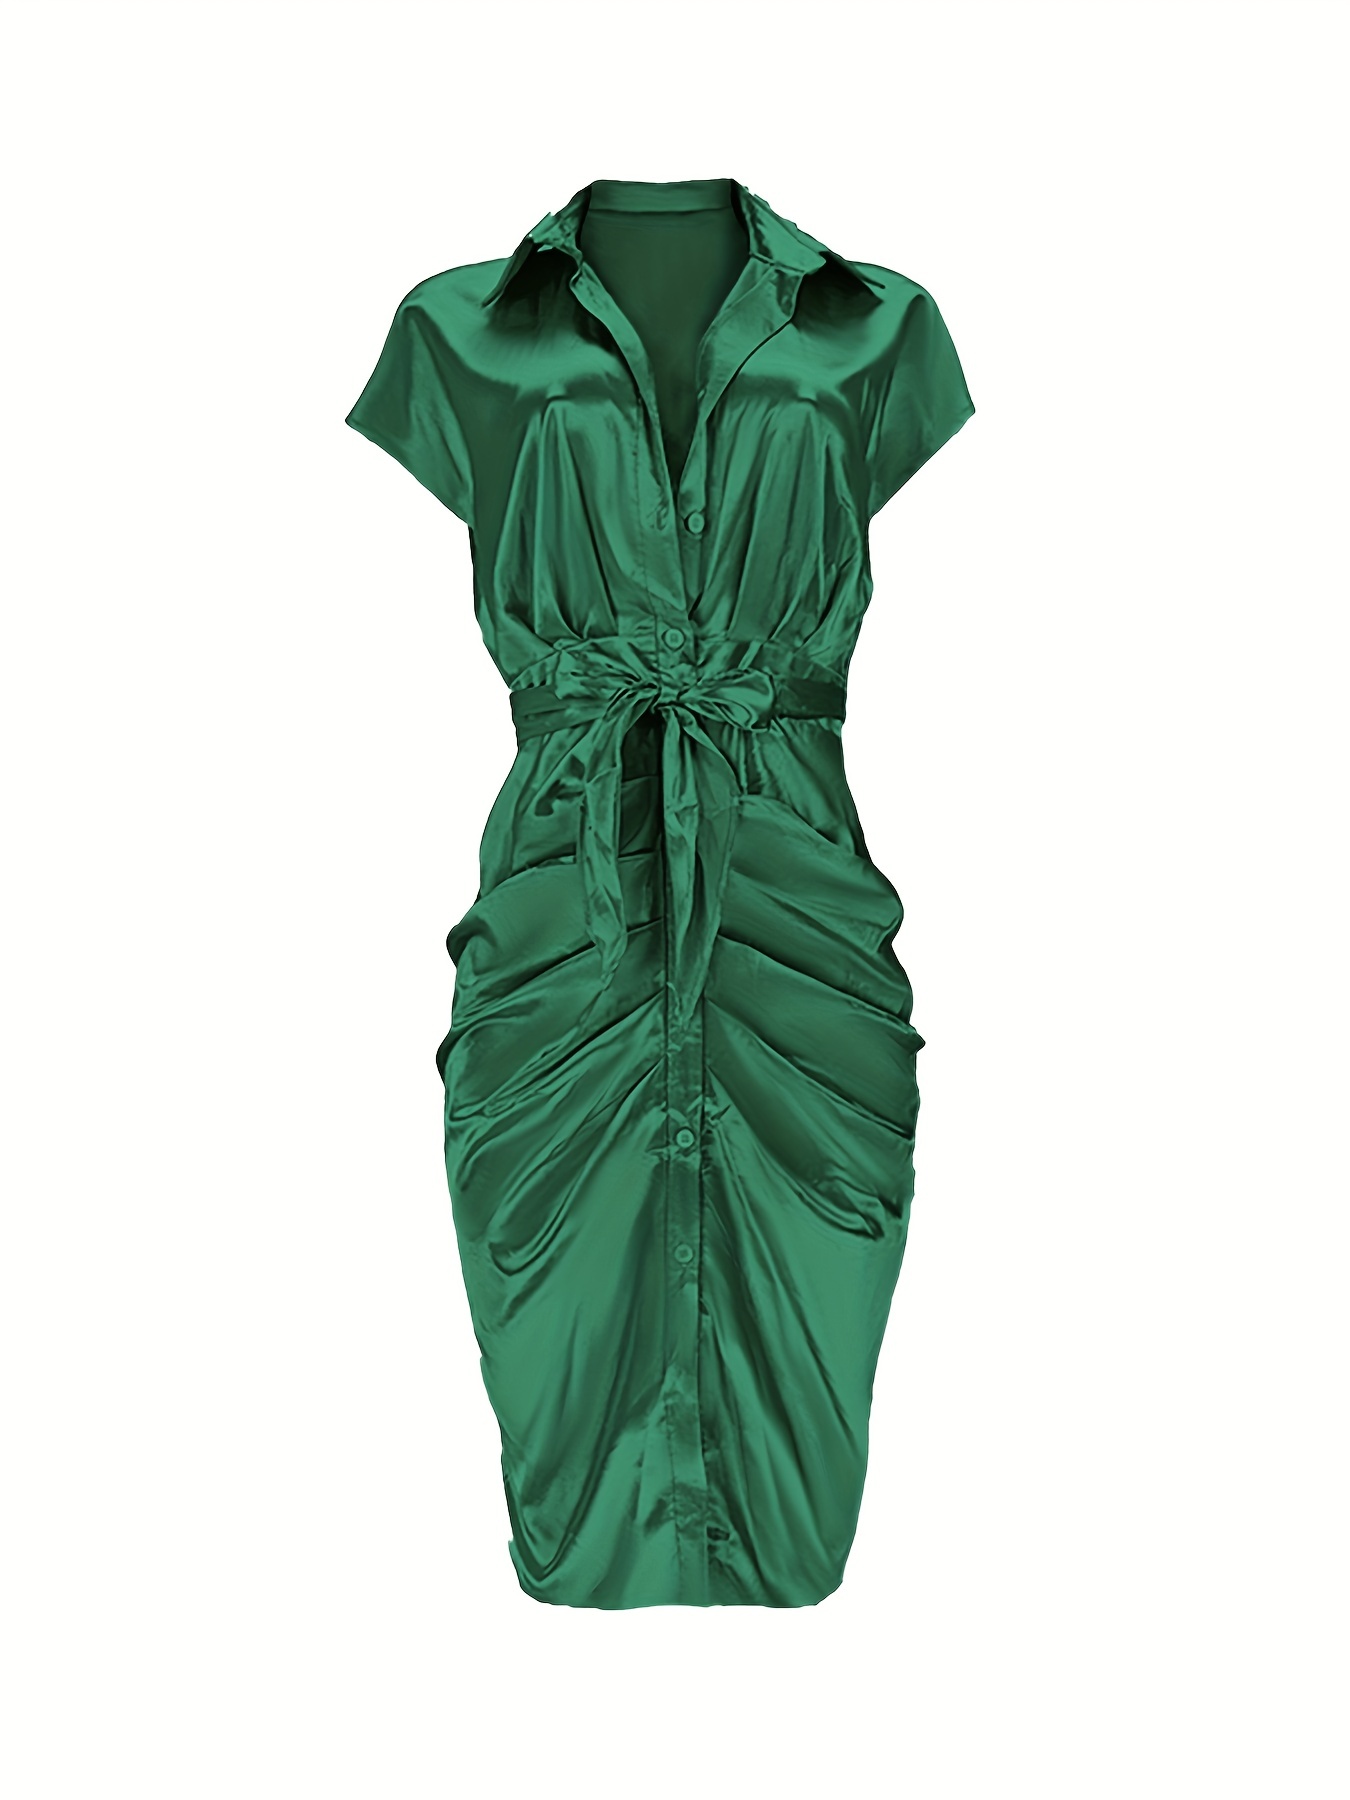 Satin Tunic Dress - Dark green - Ladies